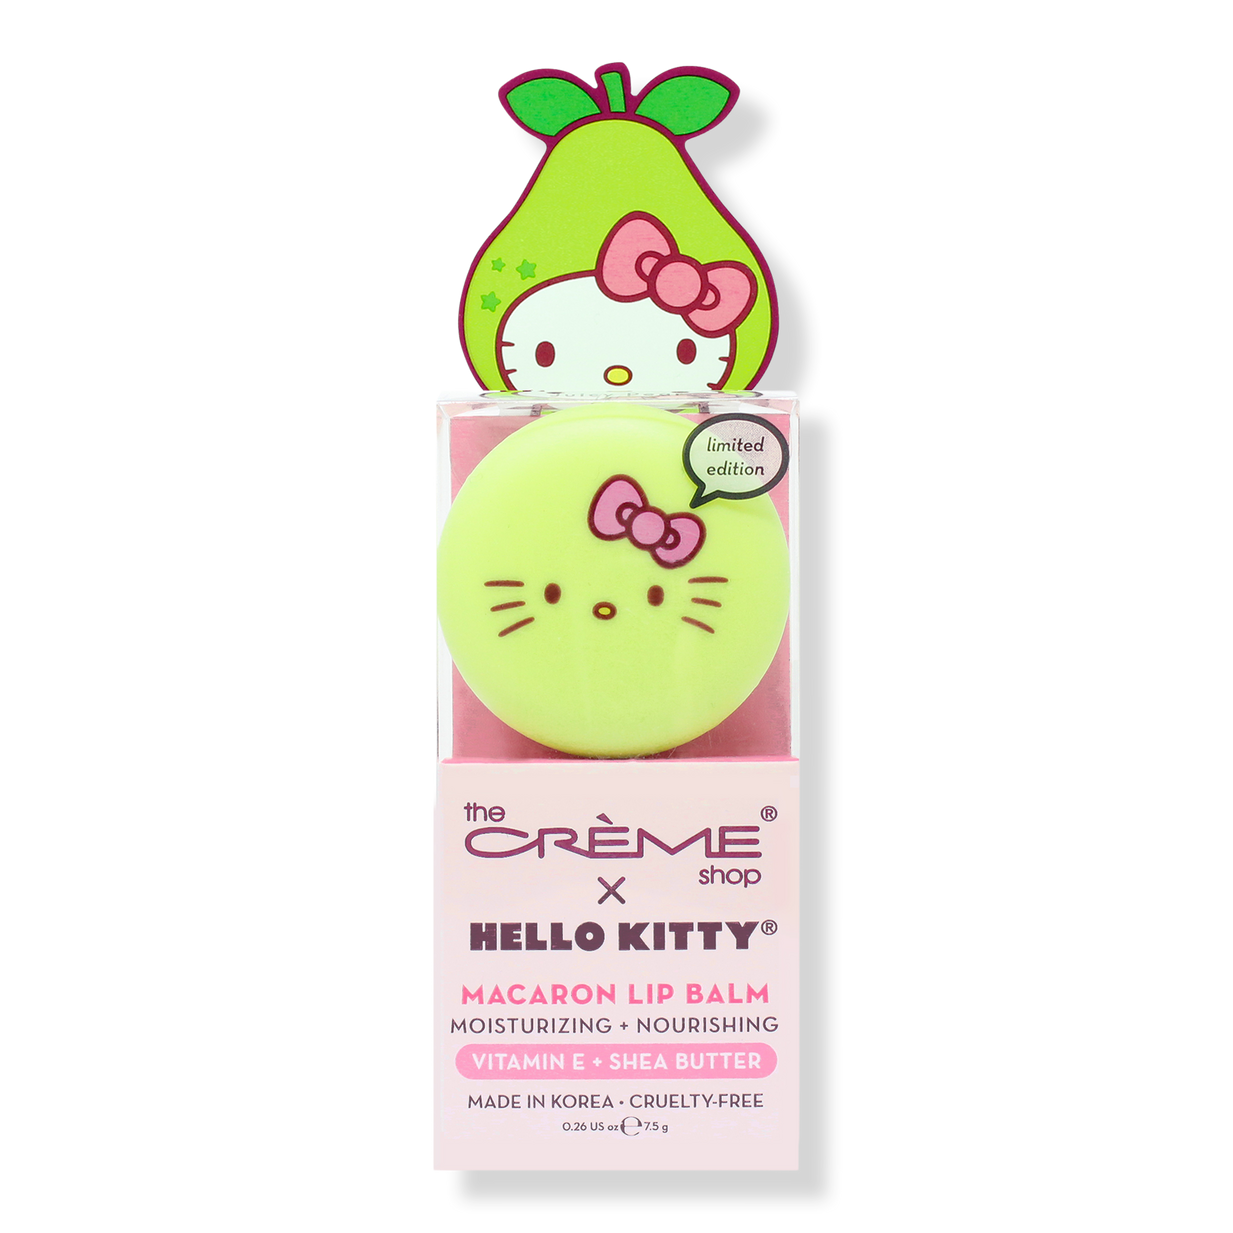 Hello Kitty Nail Stickers Glow Melody Sanrio Little Twin Stars Manicure  Pedicure